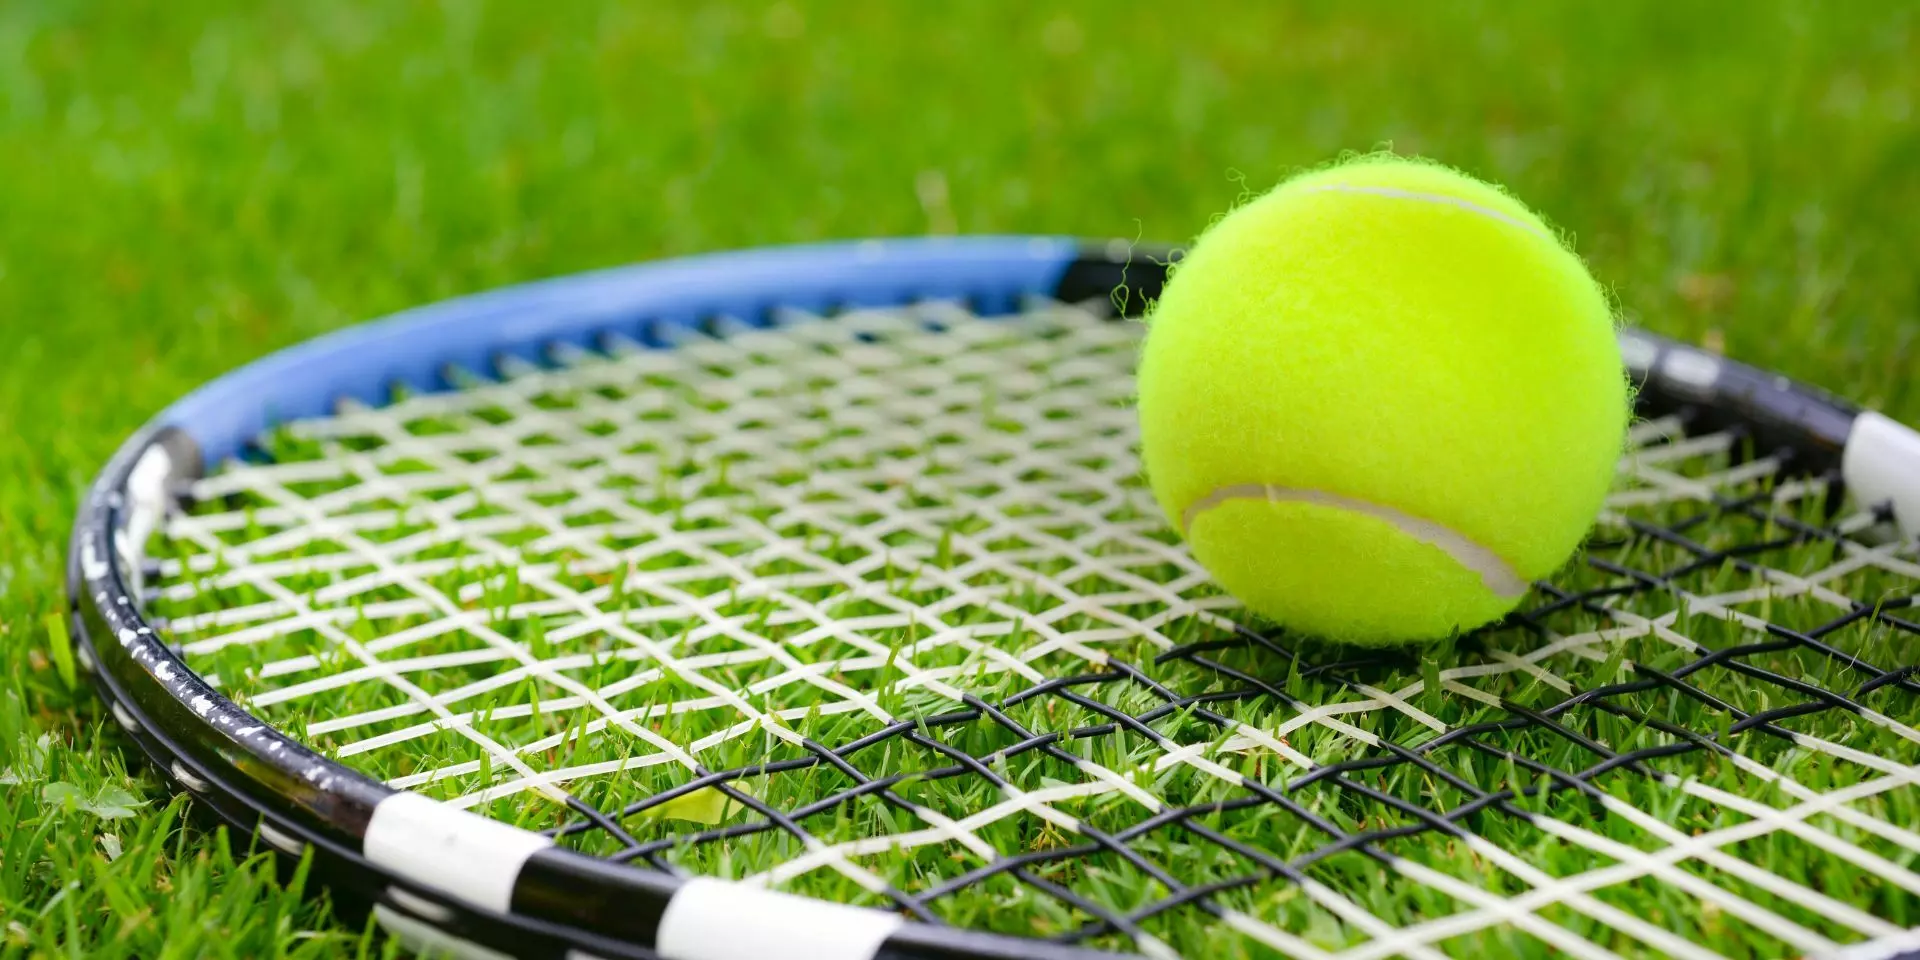 a tennis ball on a racket